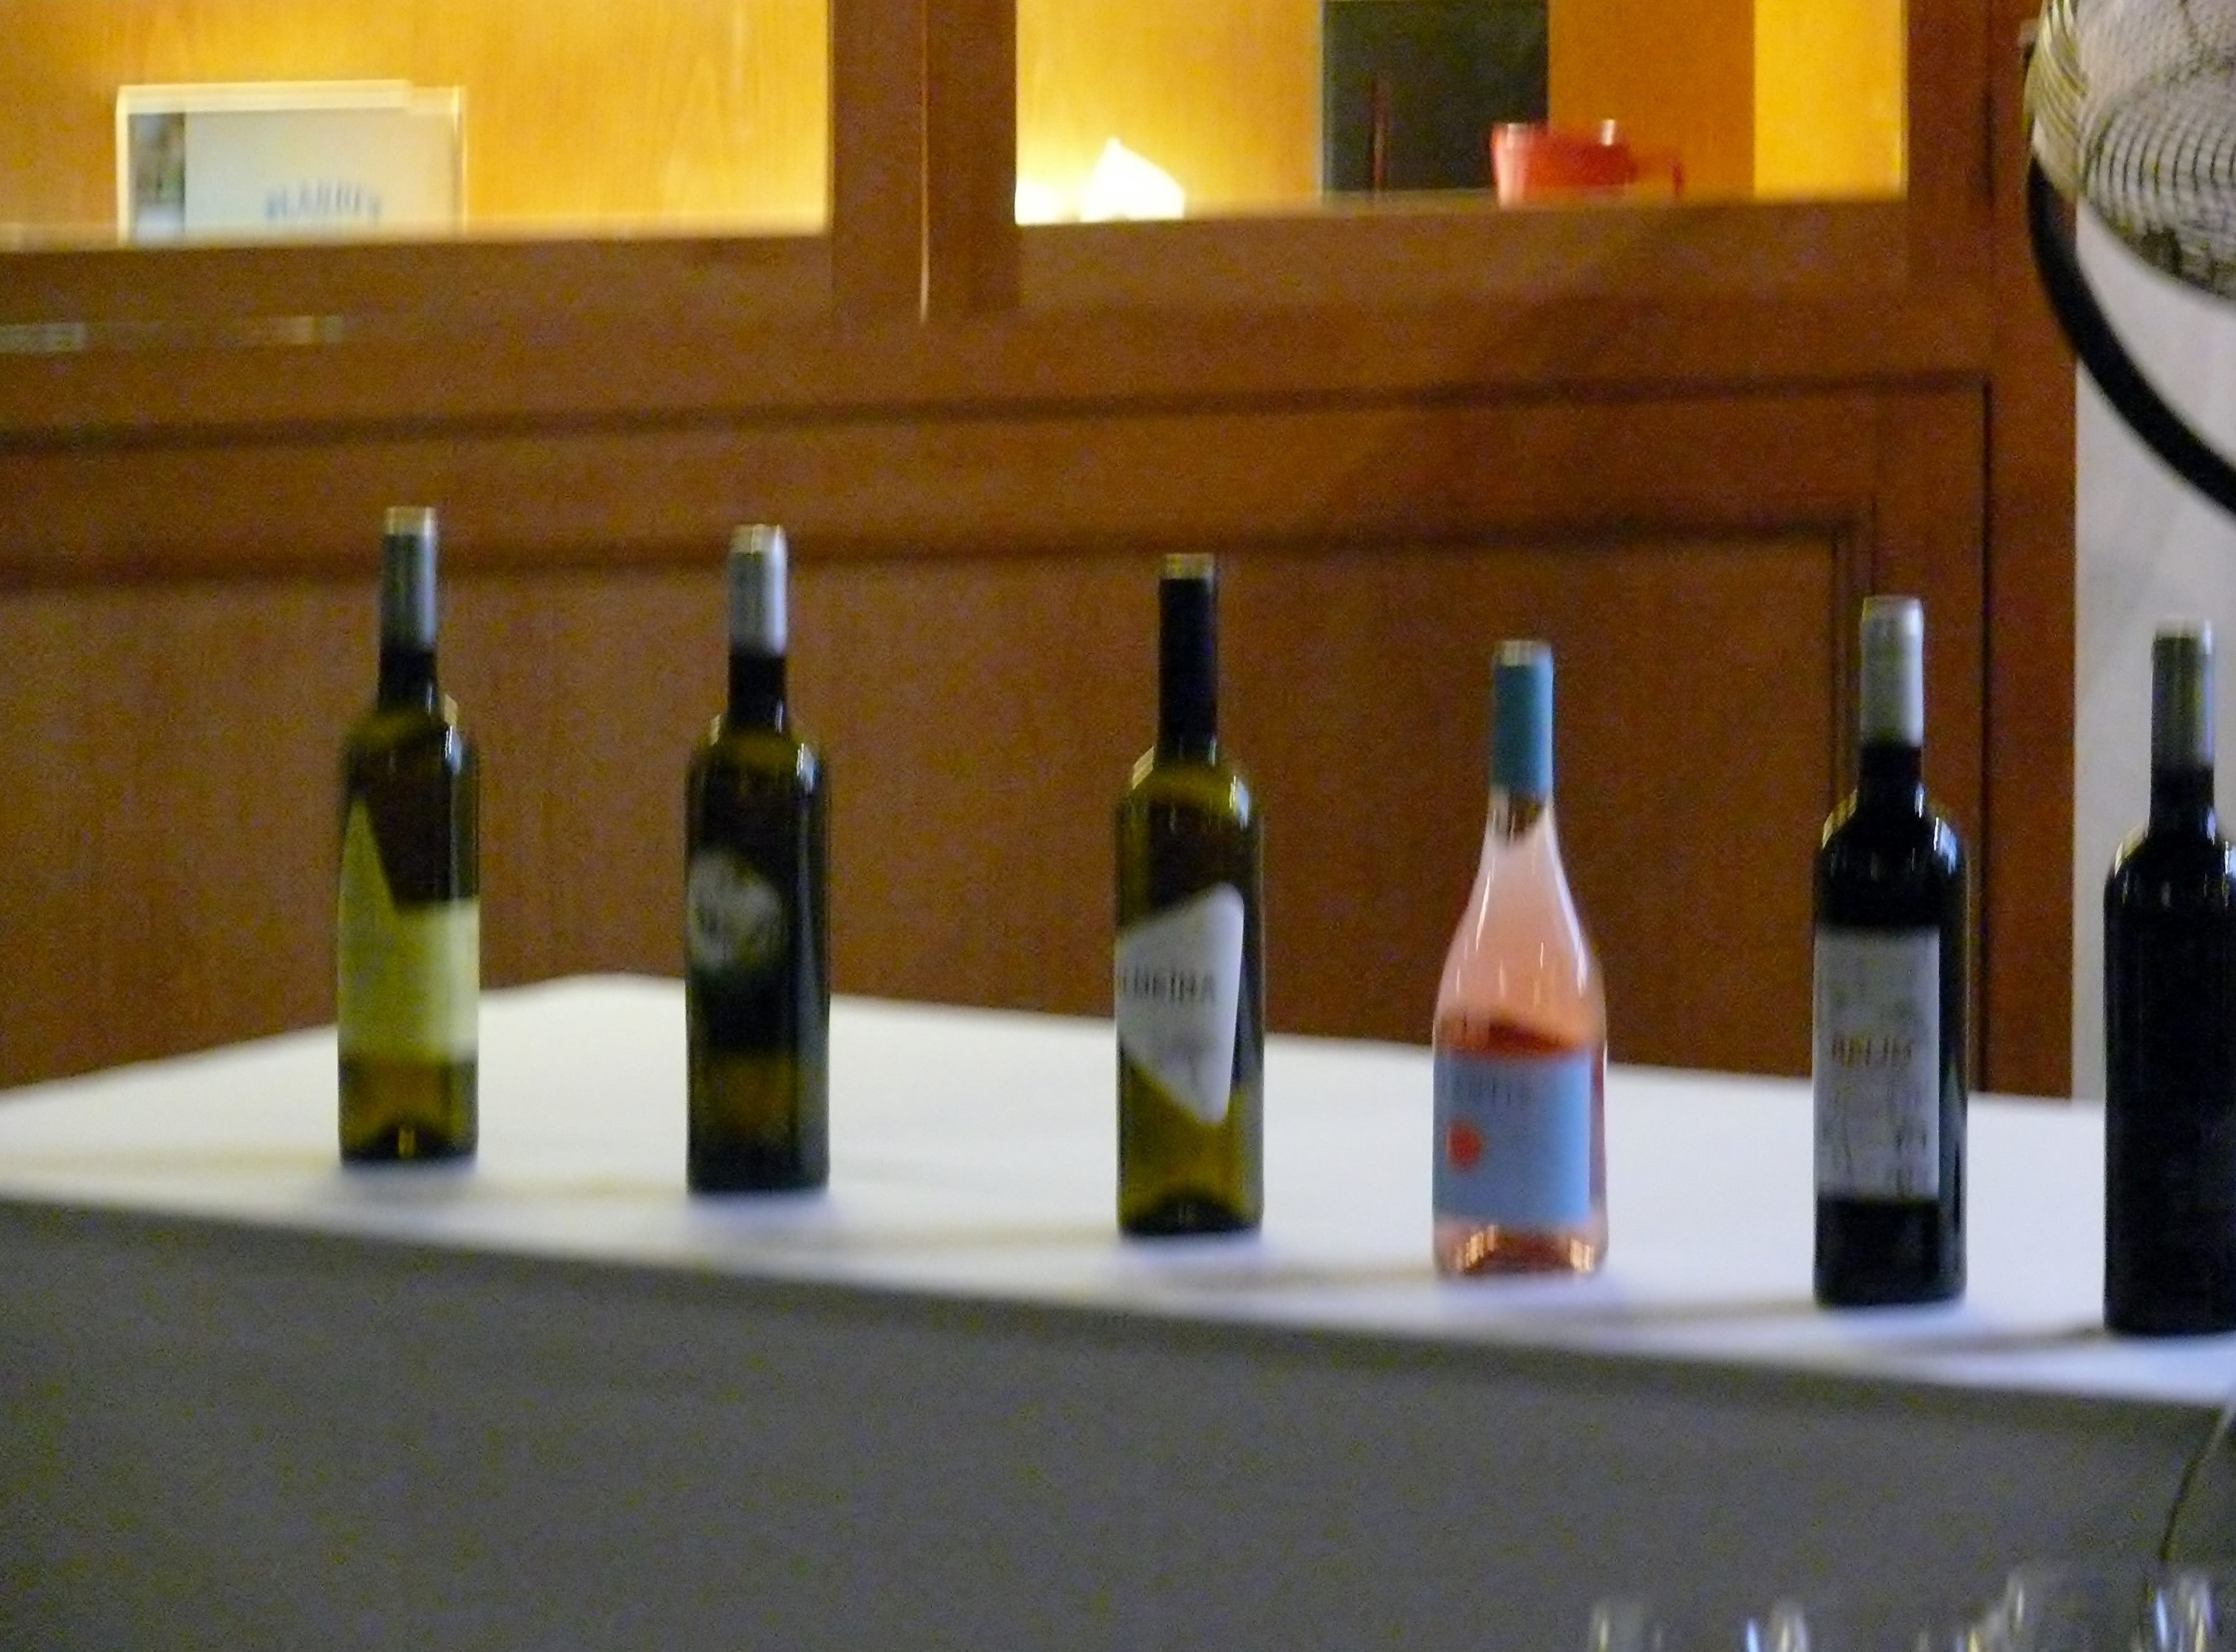 Madeira table wines to taste